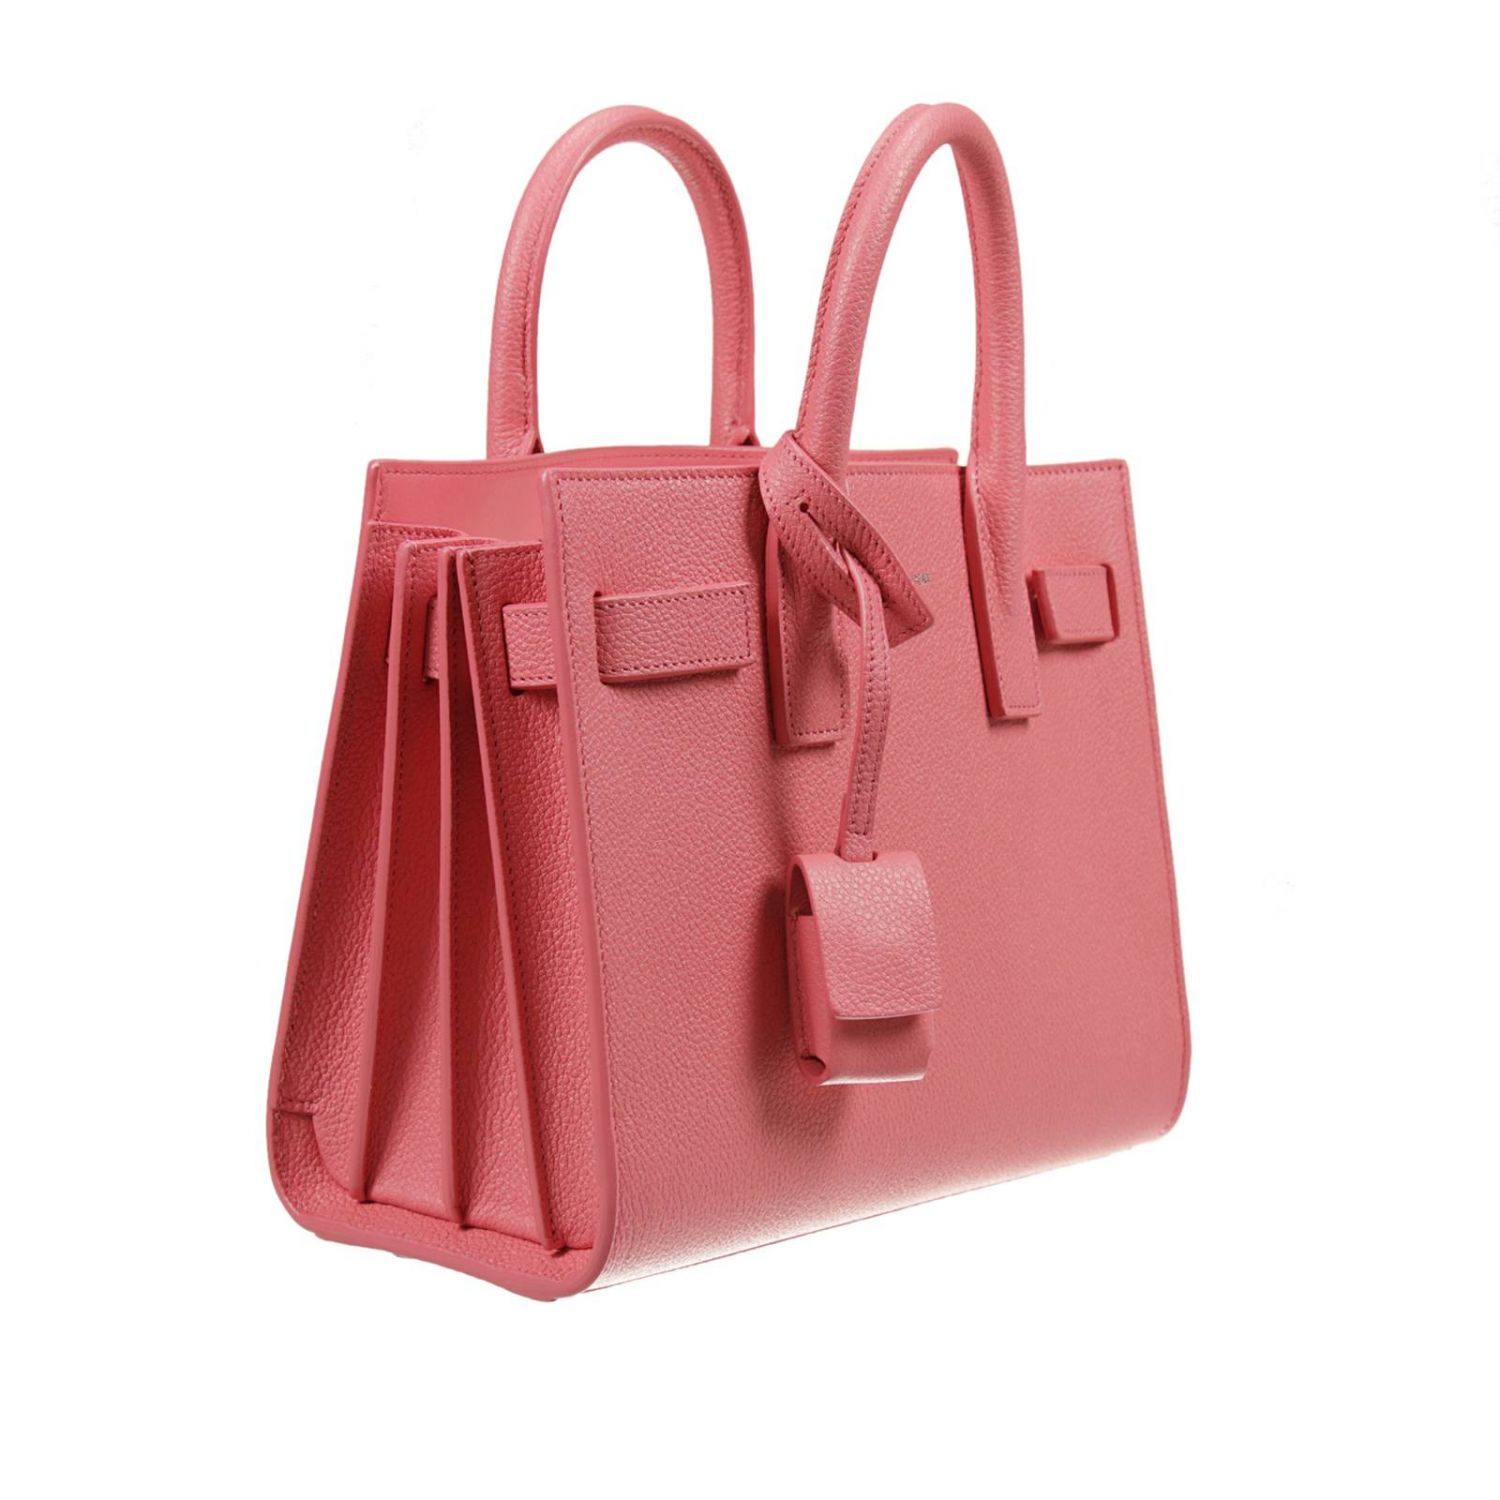 SAINT LAURENT: | Shoulder Bag Saint Laurent Women Pink | Shoulder Bag ...